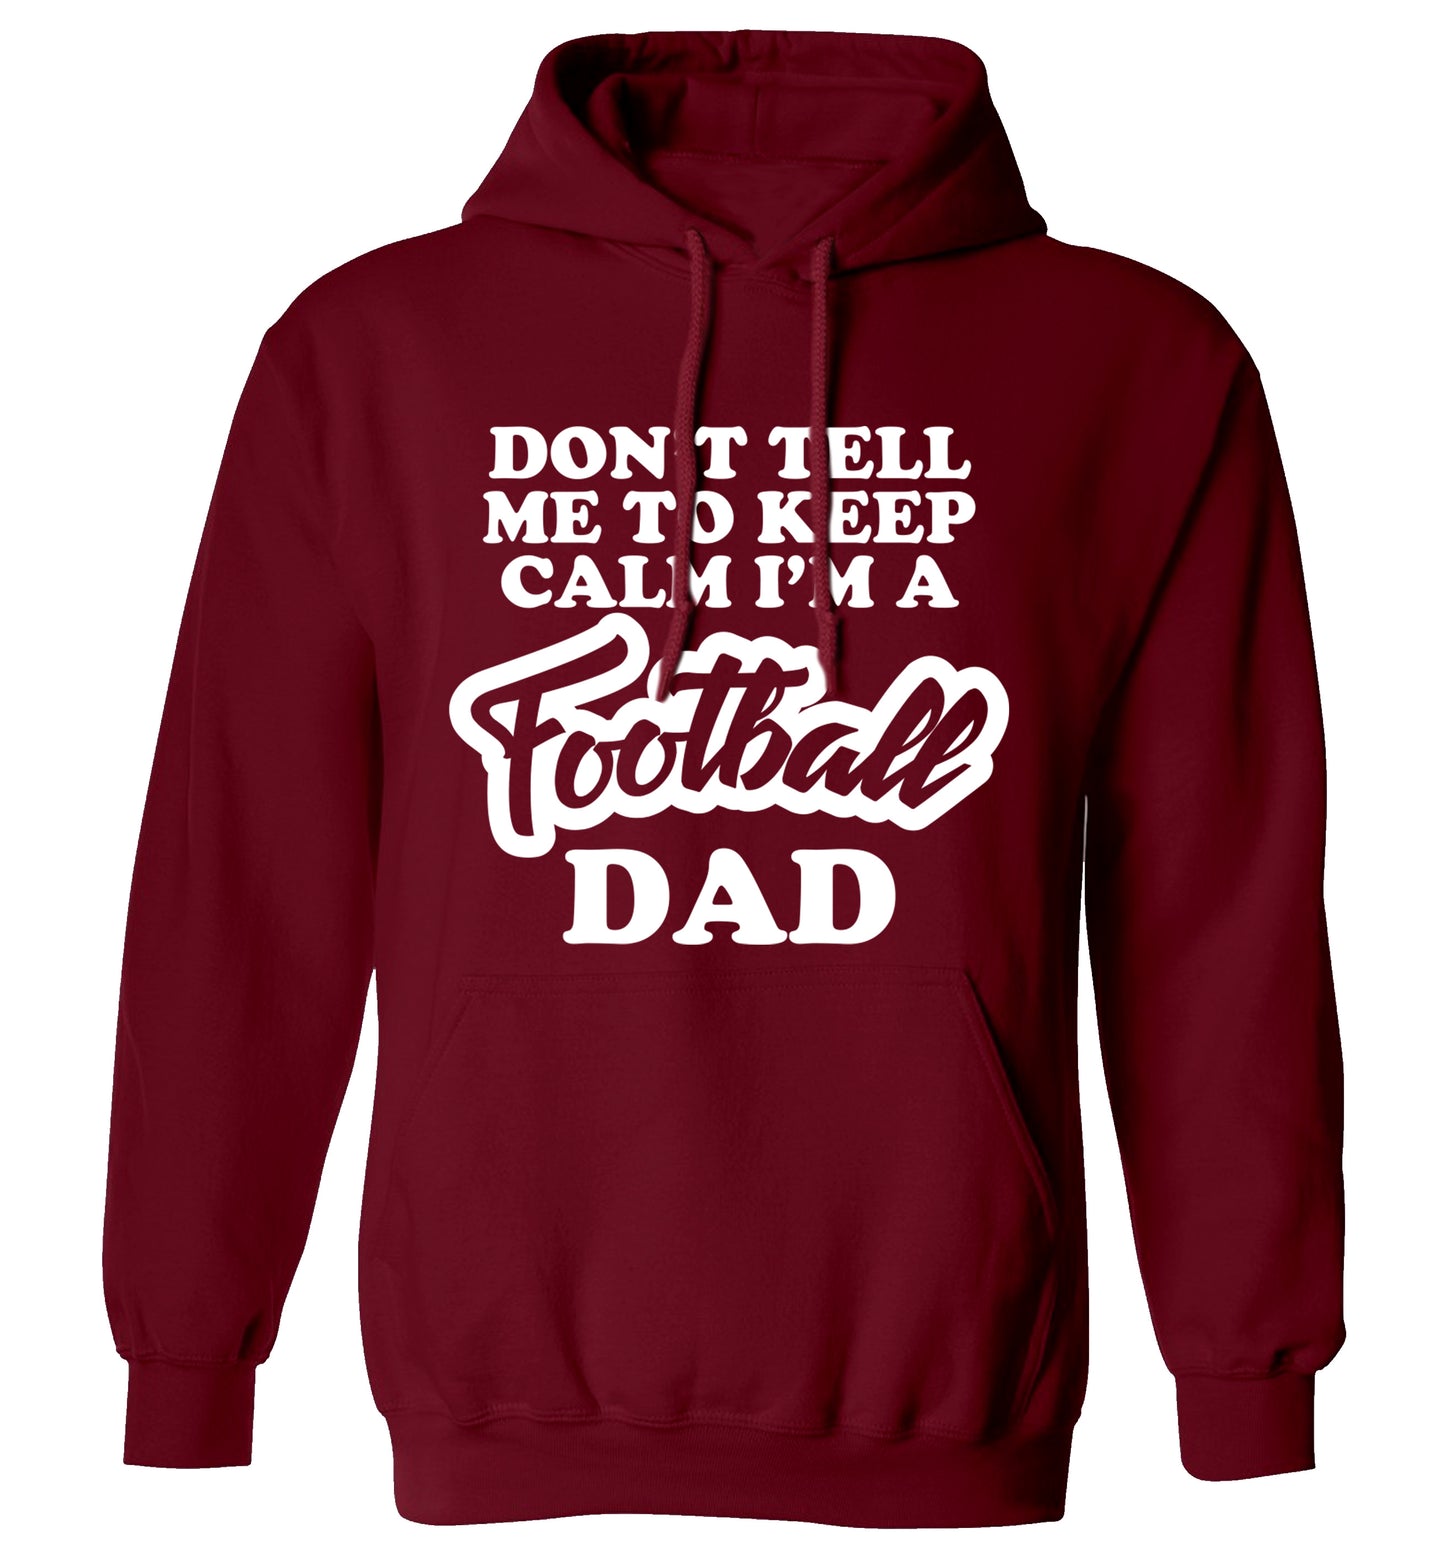 Don't tell me to keep calm I'm a football grandad adults unisexmaroon hoodie 2XL